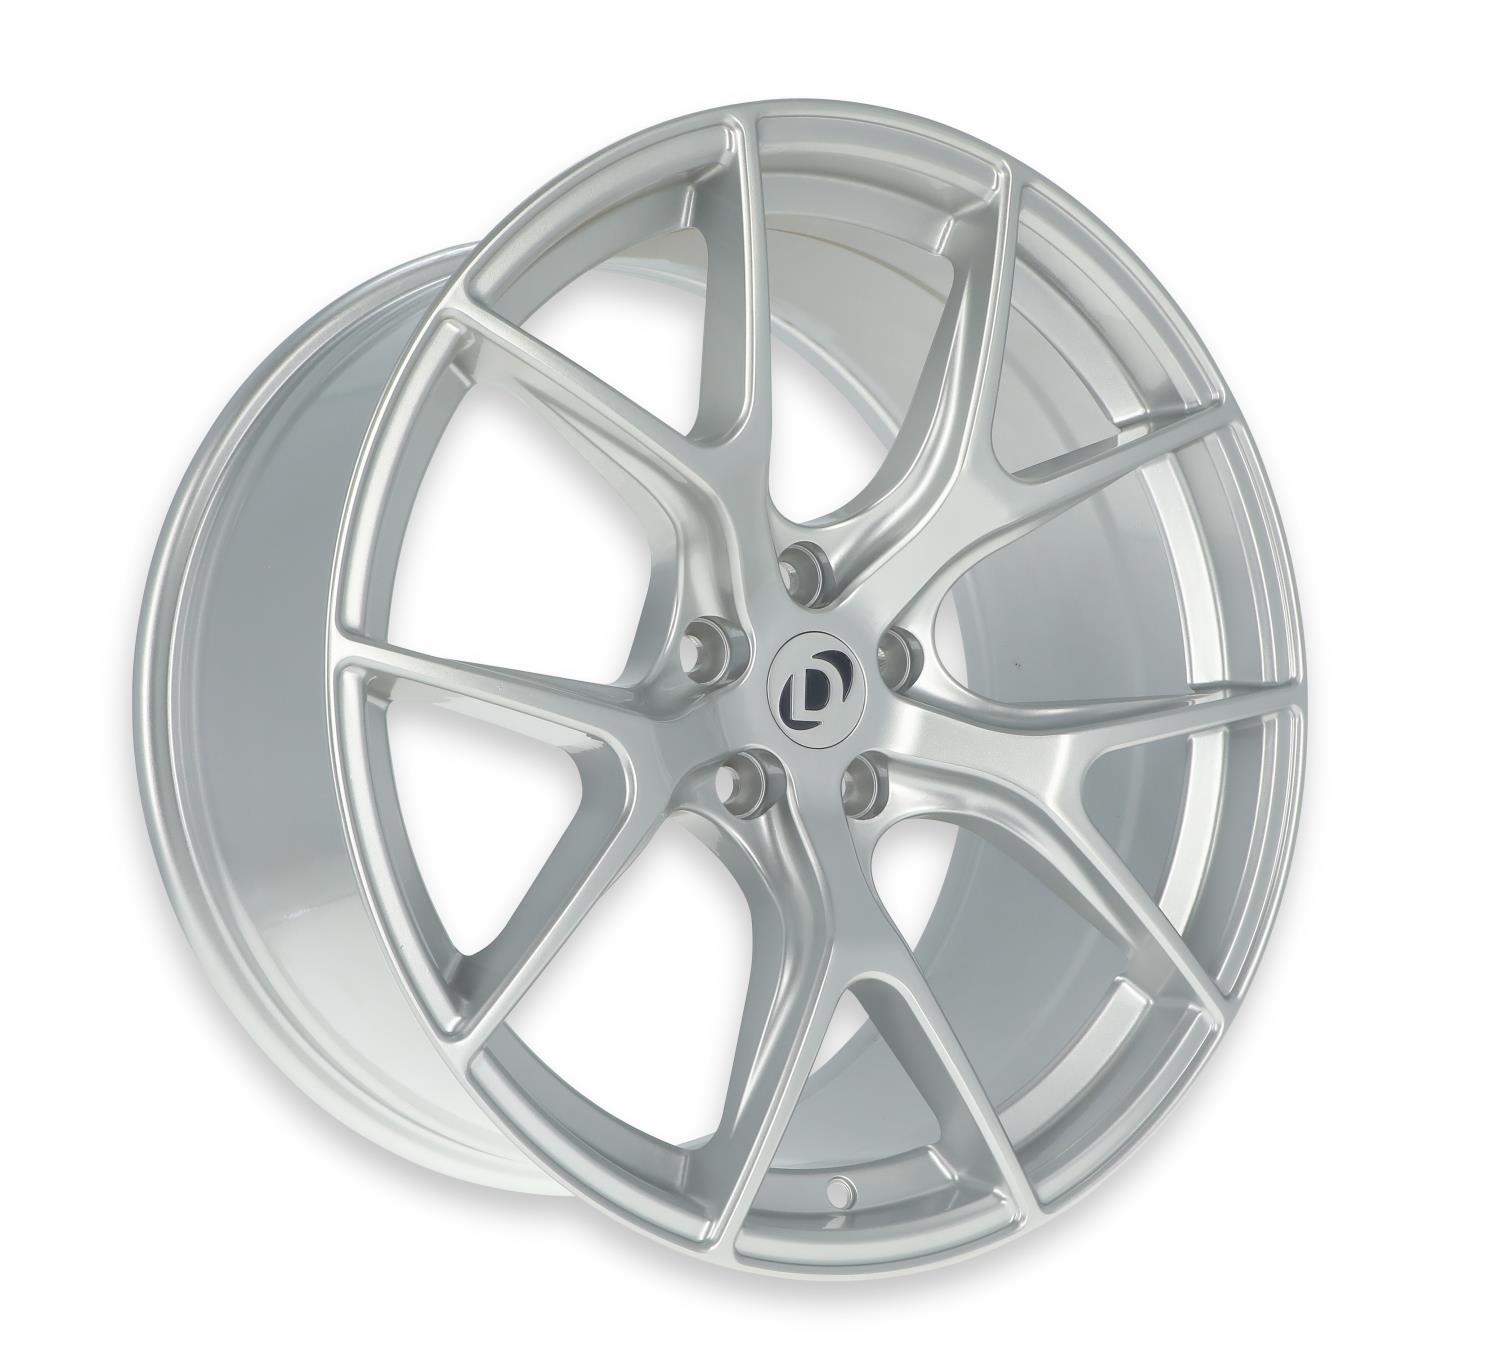 Hyper Kinetic Rear Wheel, Size: 19x8.5", Bolt Pattern: 5x114.3mm, Backspace: 5.54" [Silver Finish with Clearcoat]